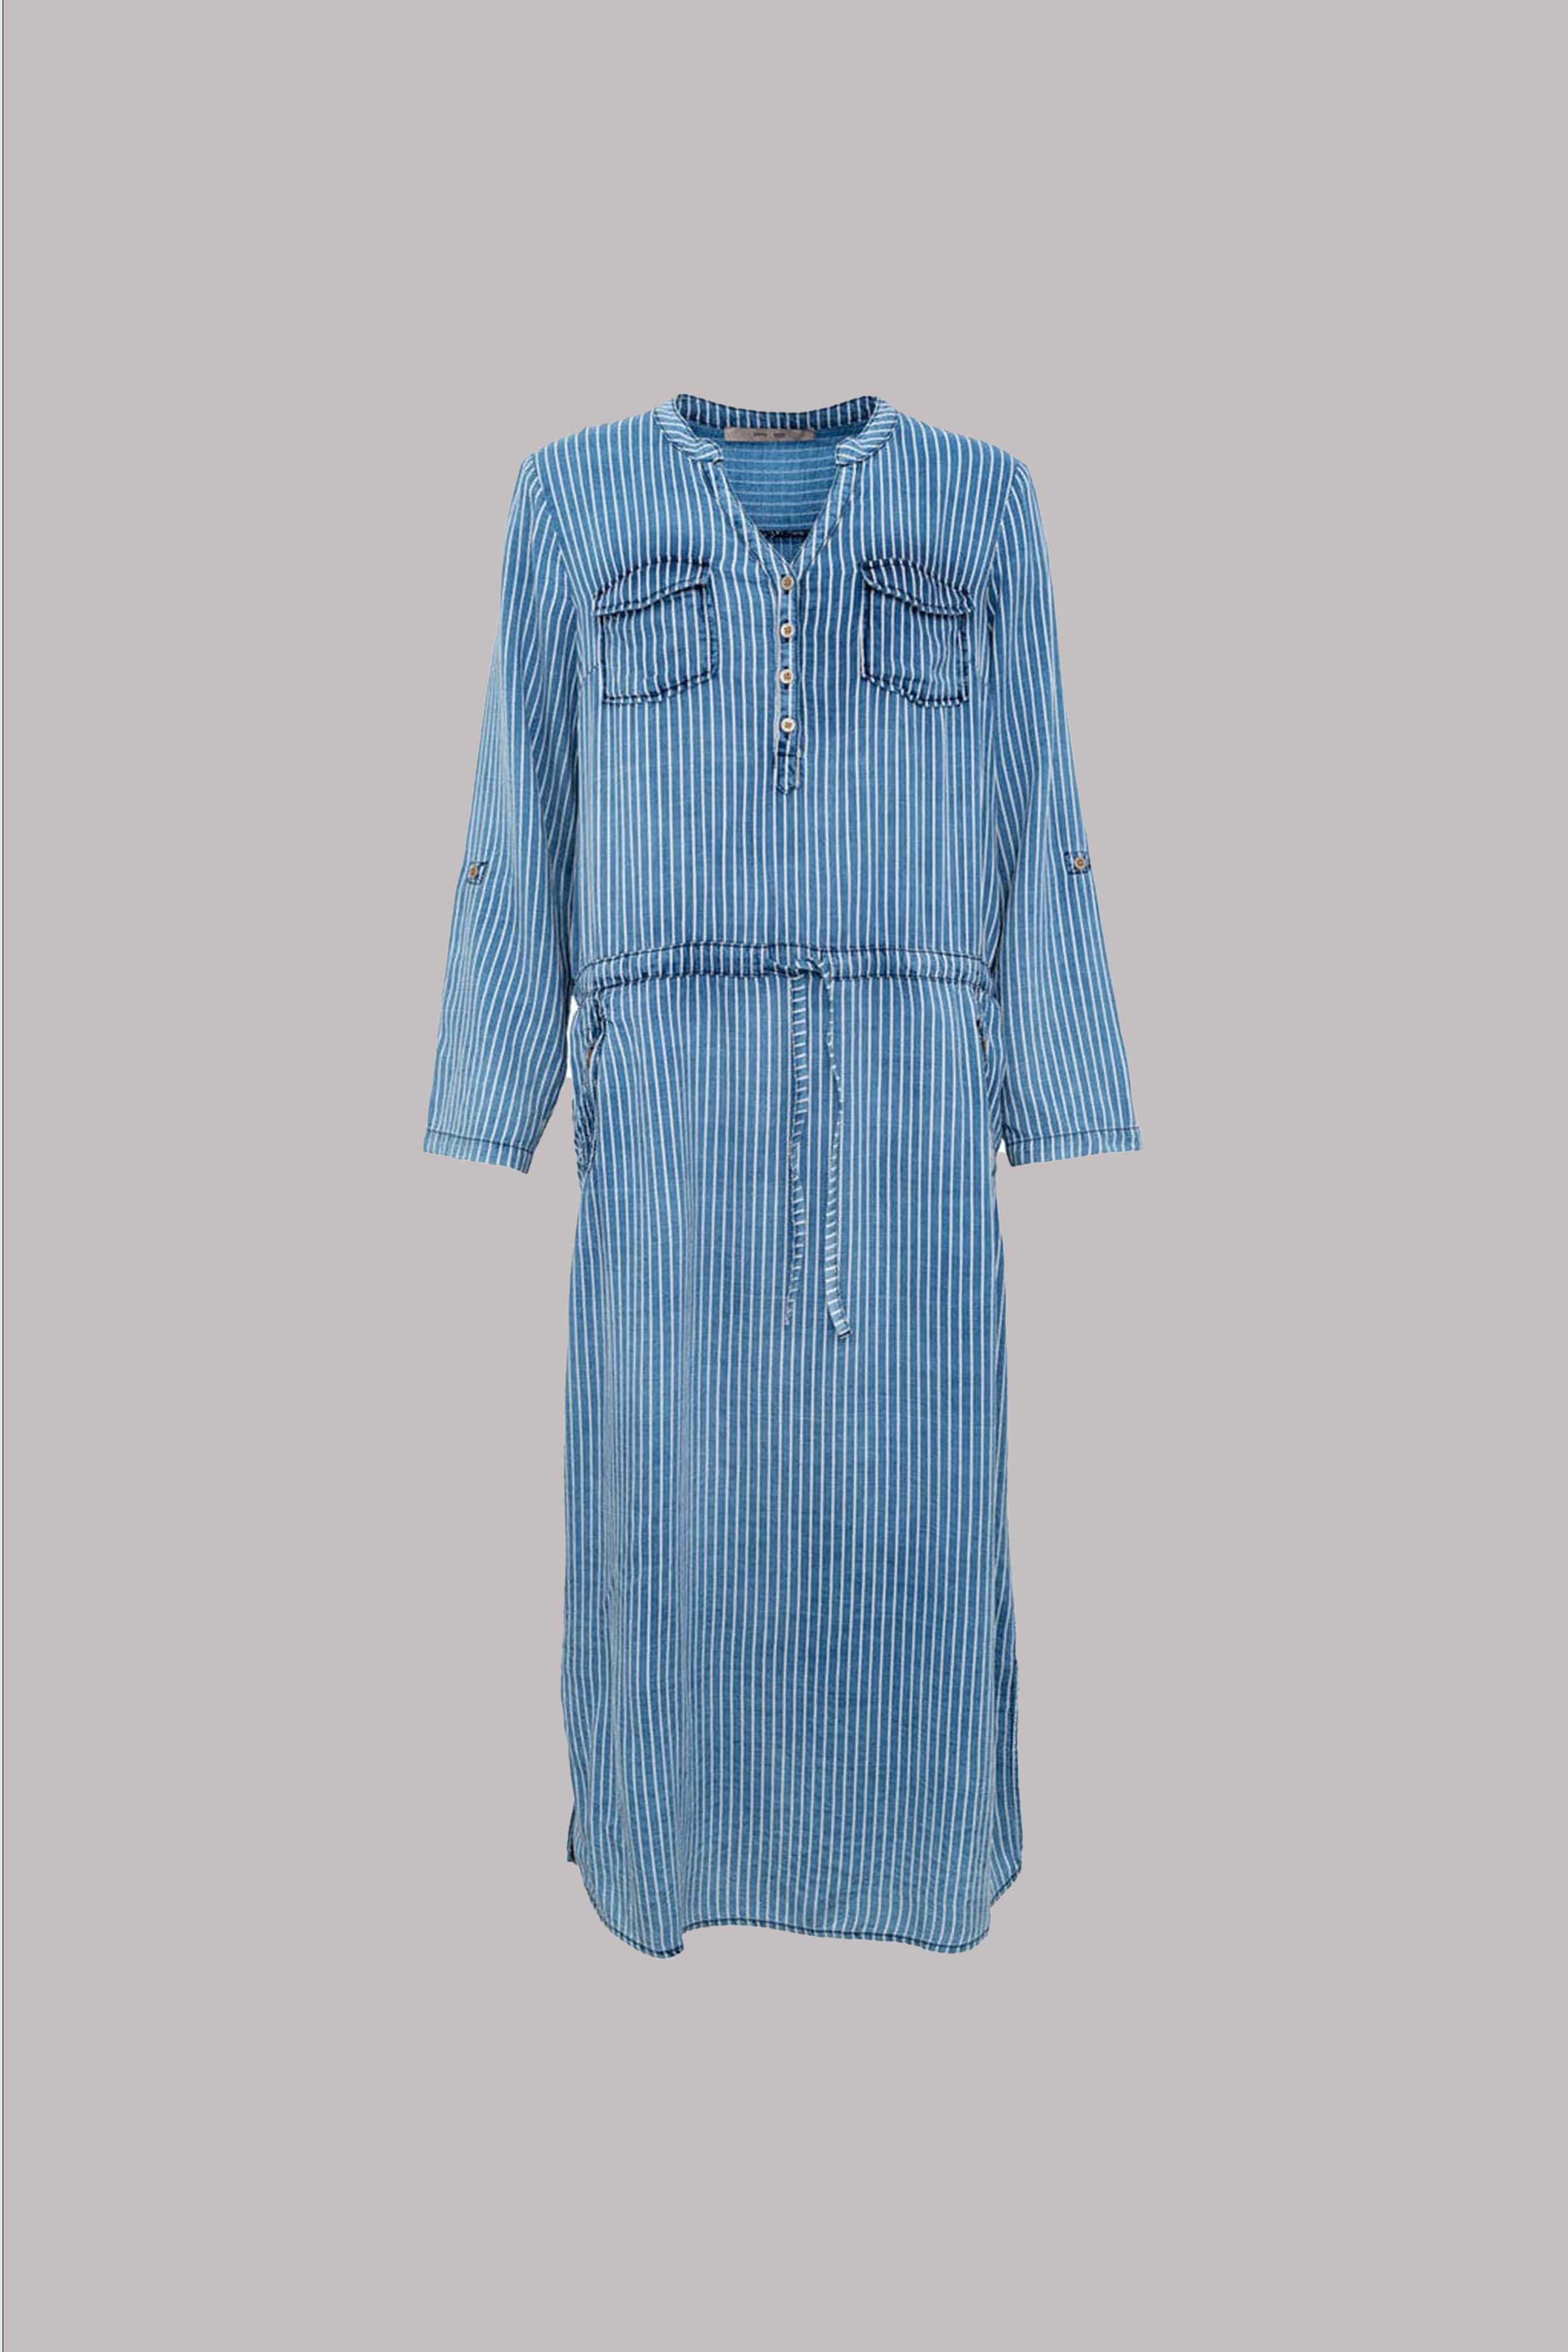 Teddie Dress in Blue Stripe